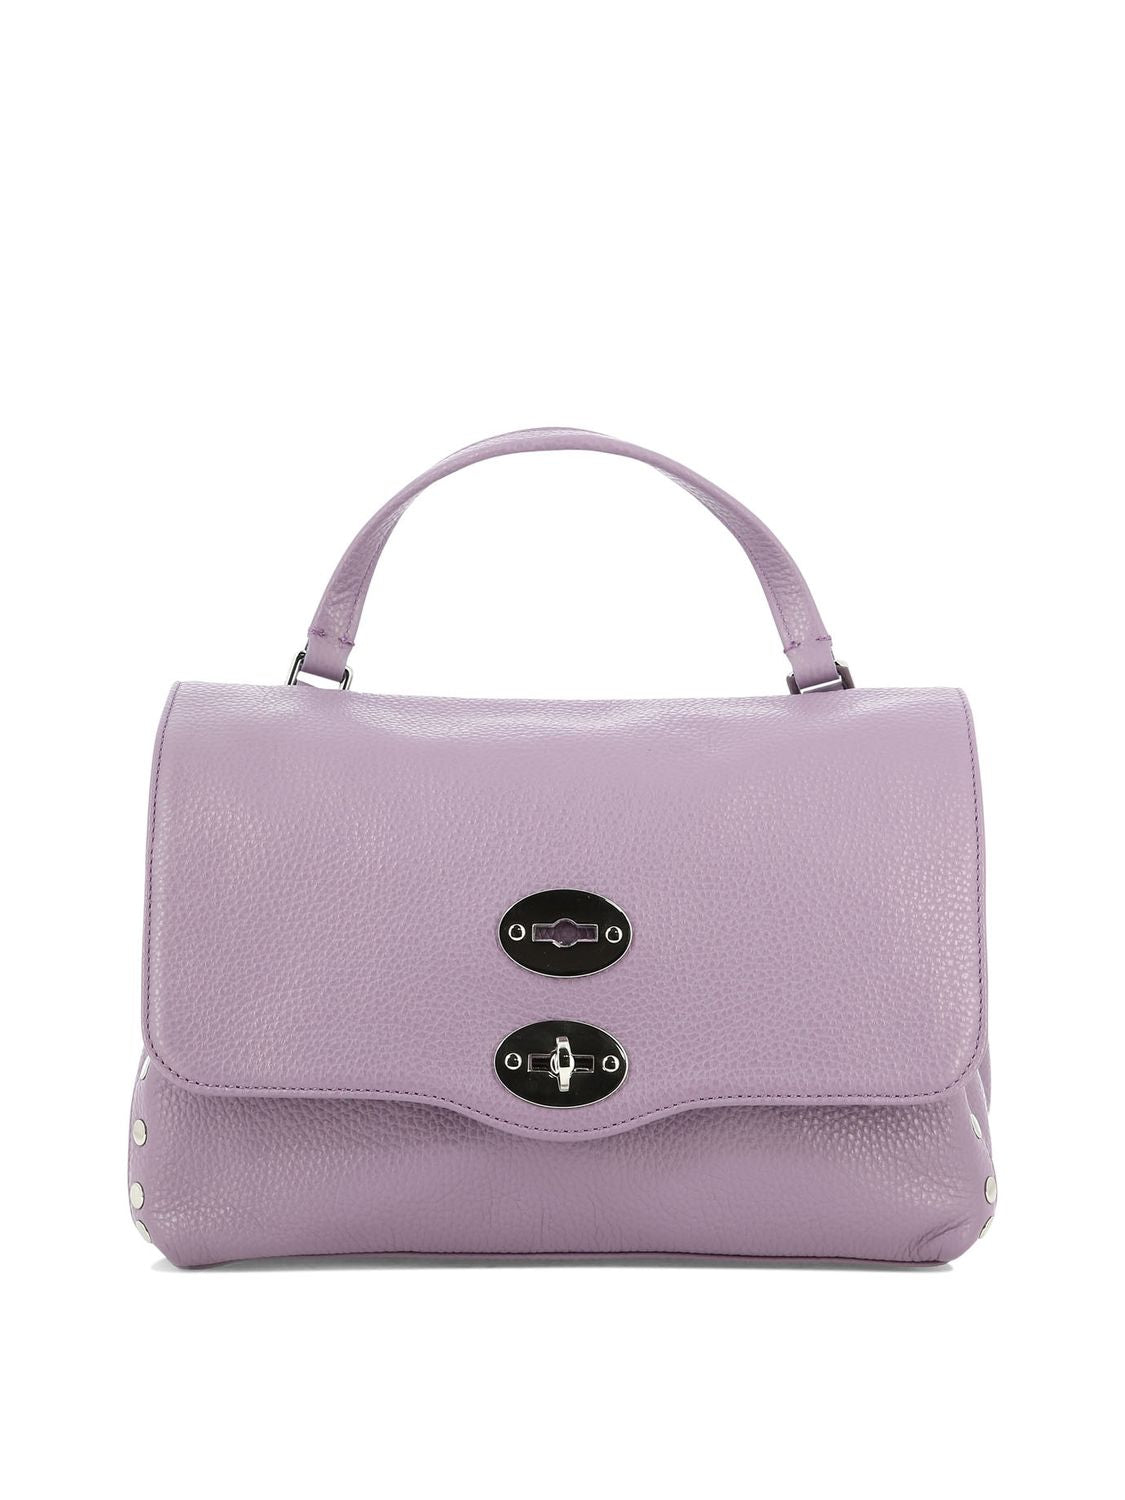 ZANELLATO Stylish Purple Leather Handbag for Women